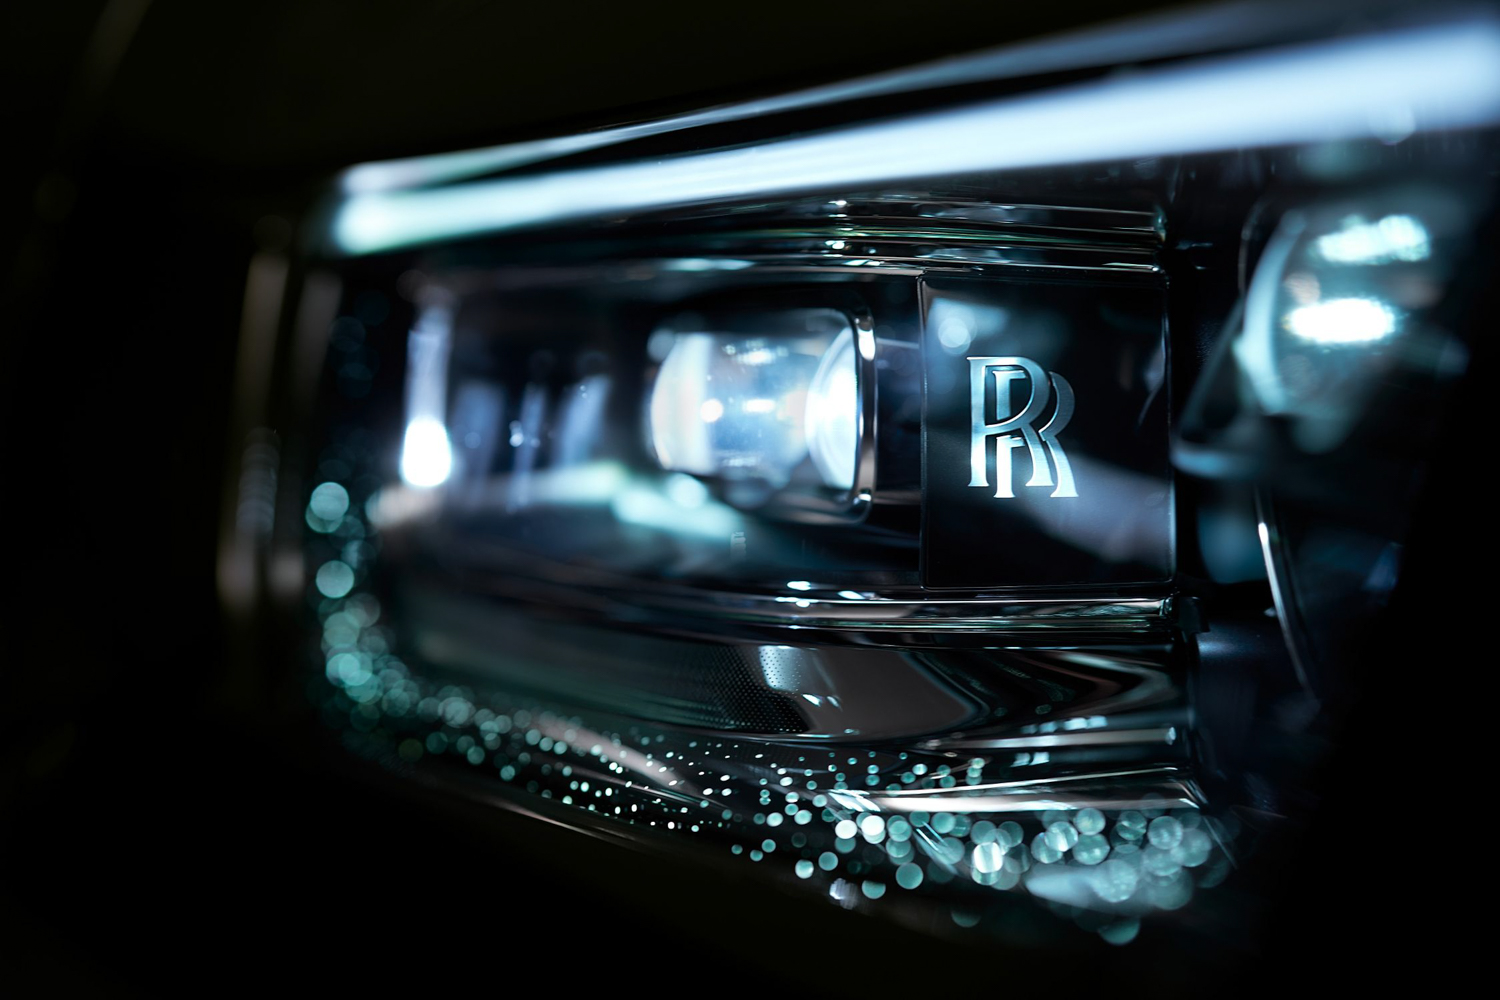 Rolls-Royce Phantom gets a facelift